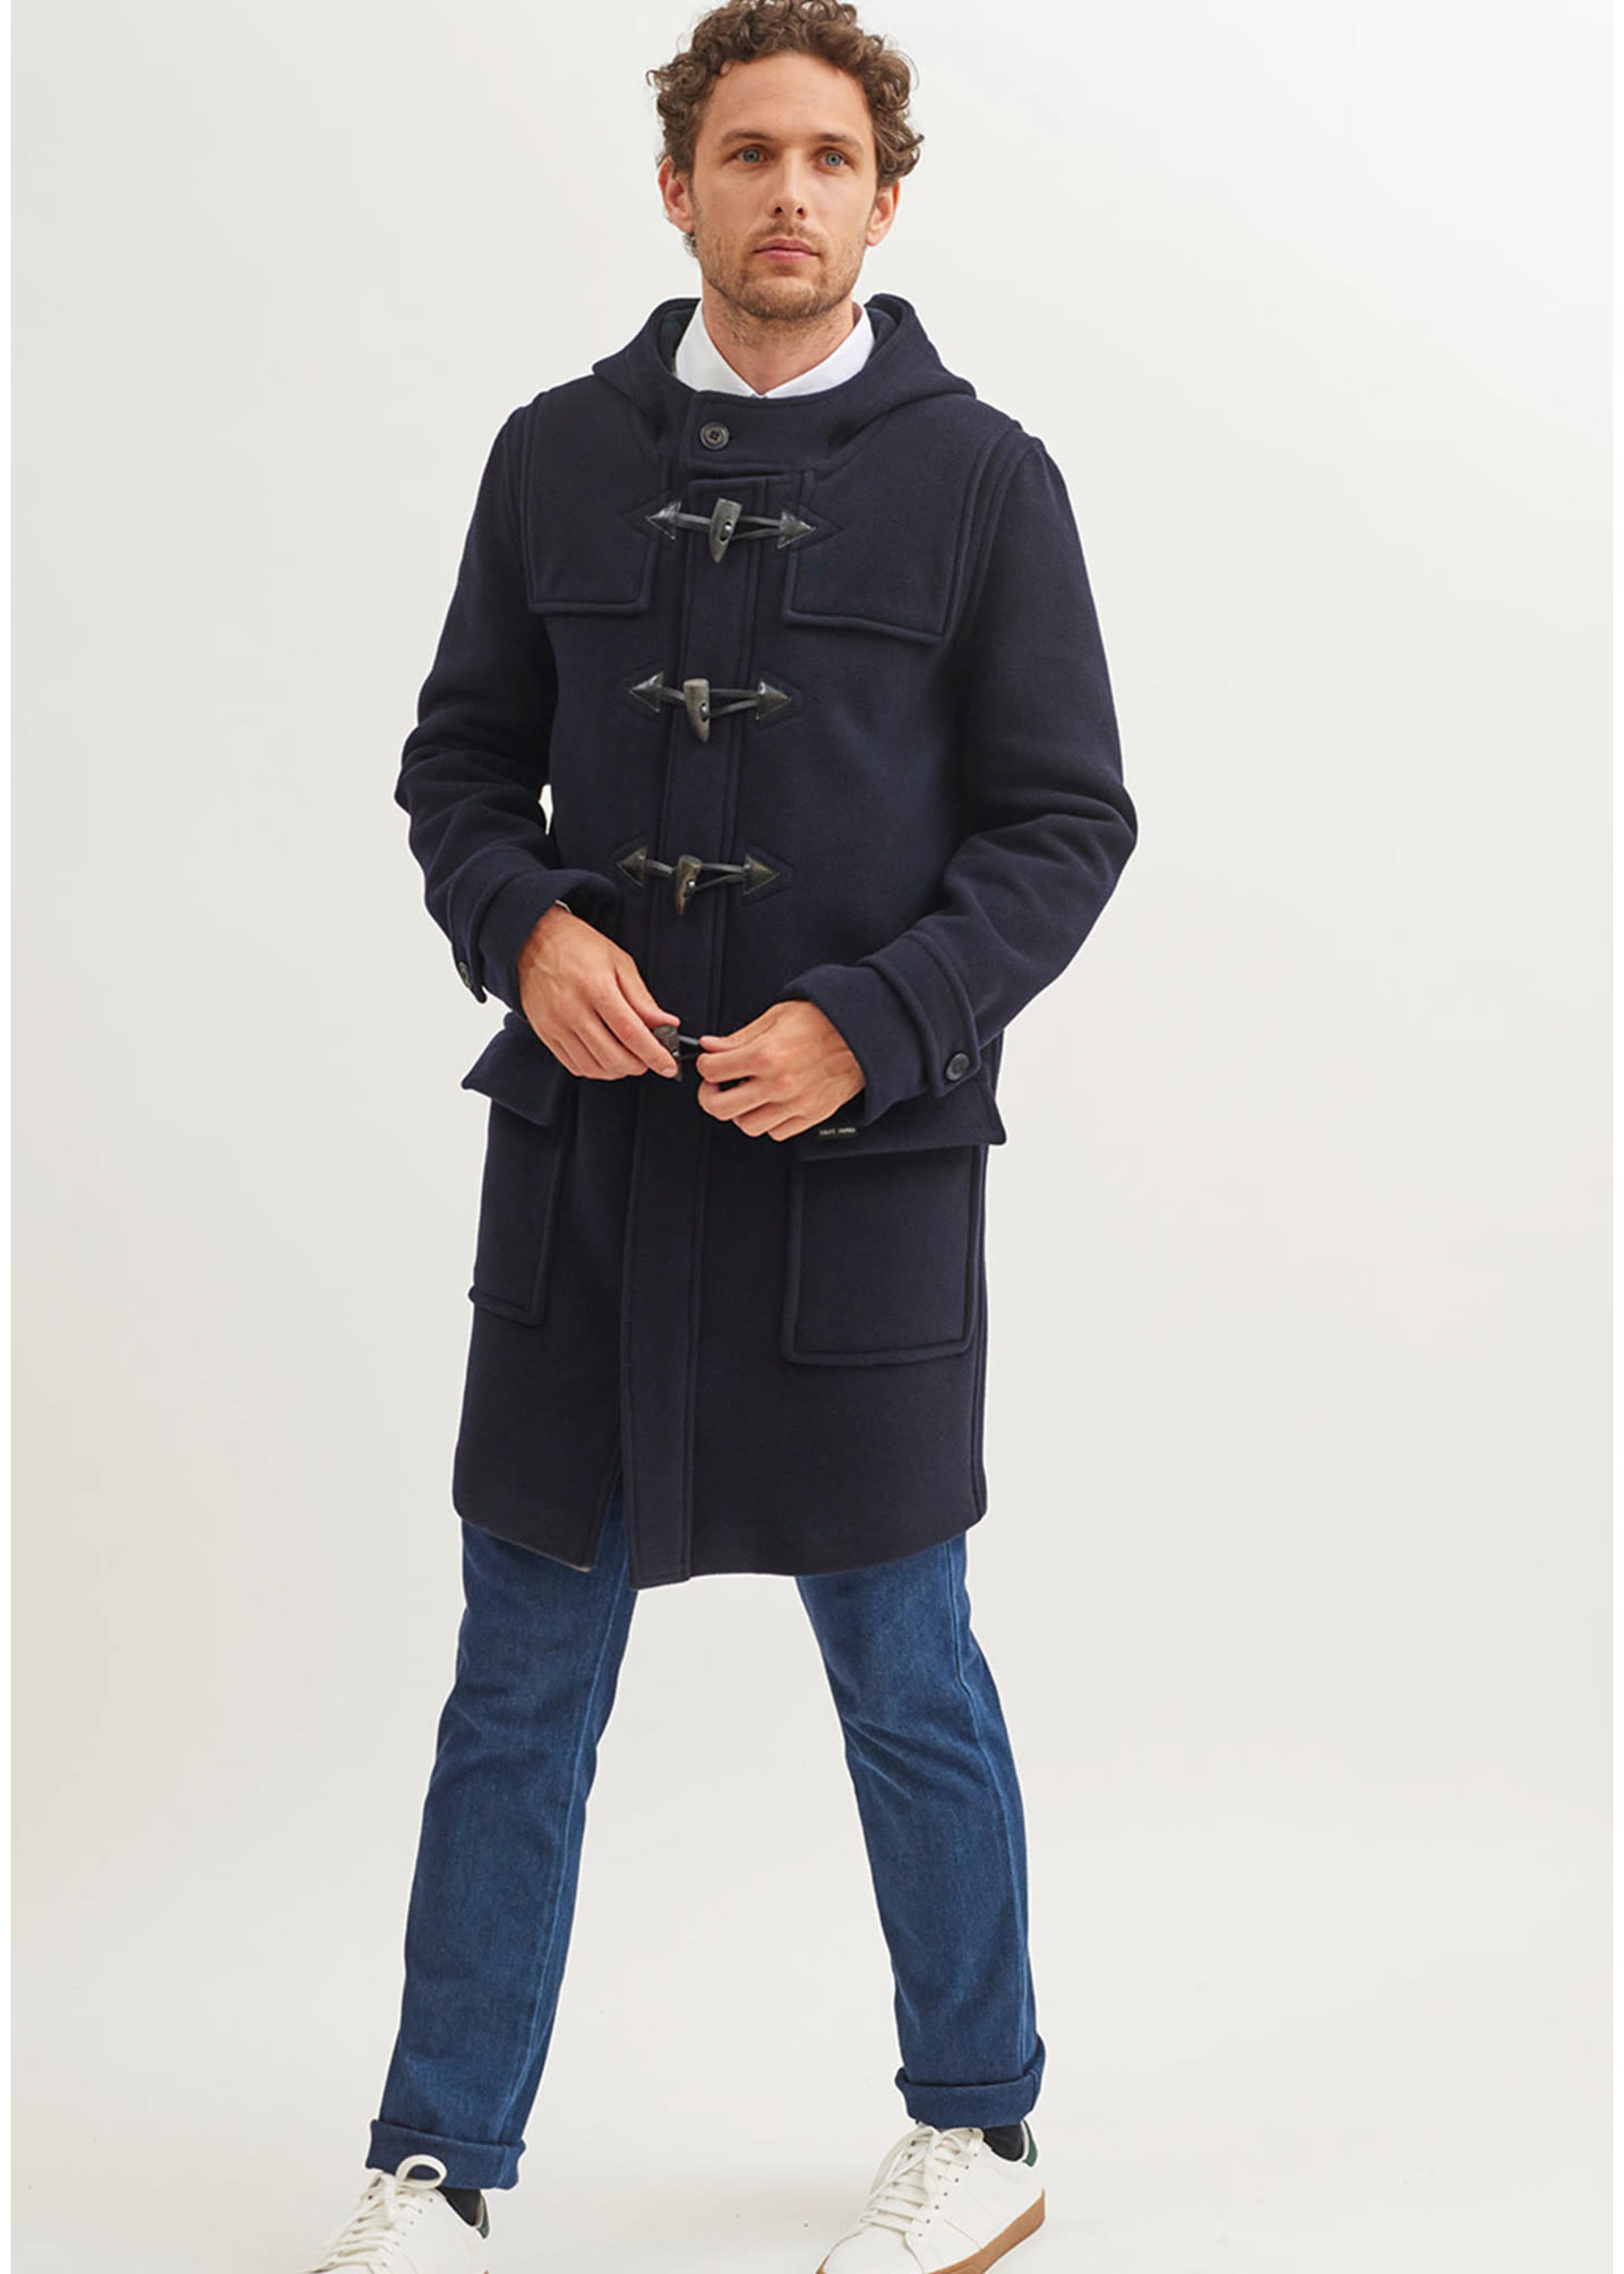 SAINT-JAMES Men's original duffle coat